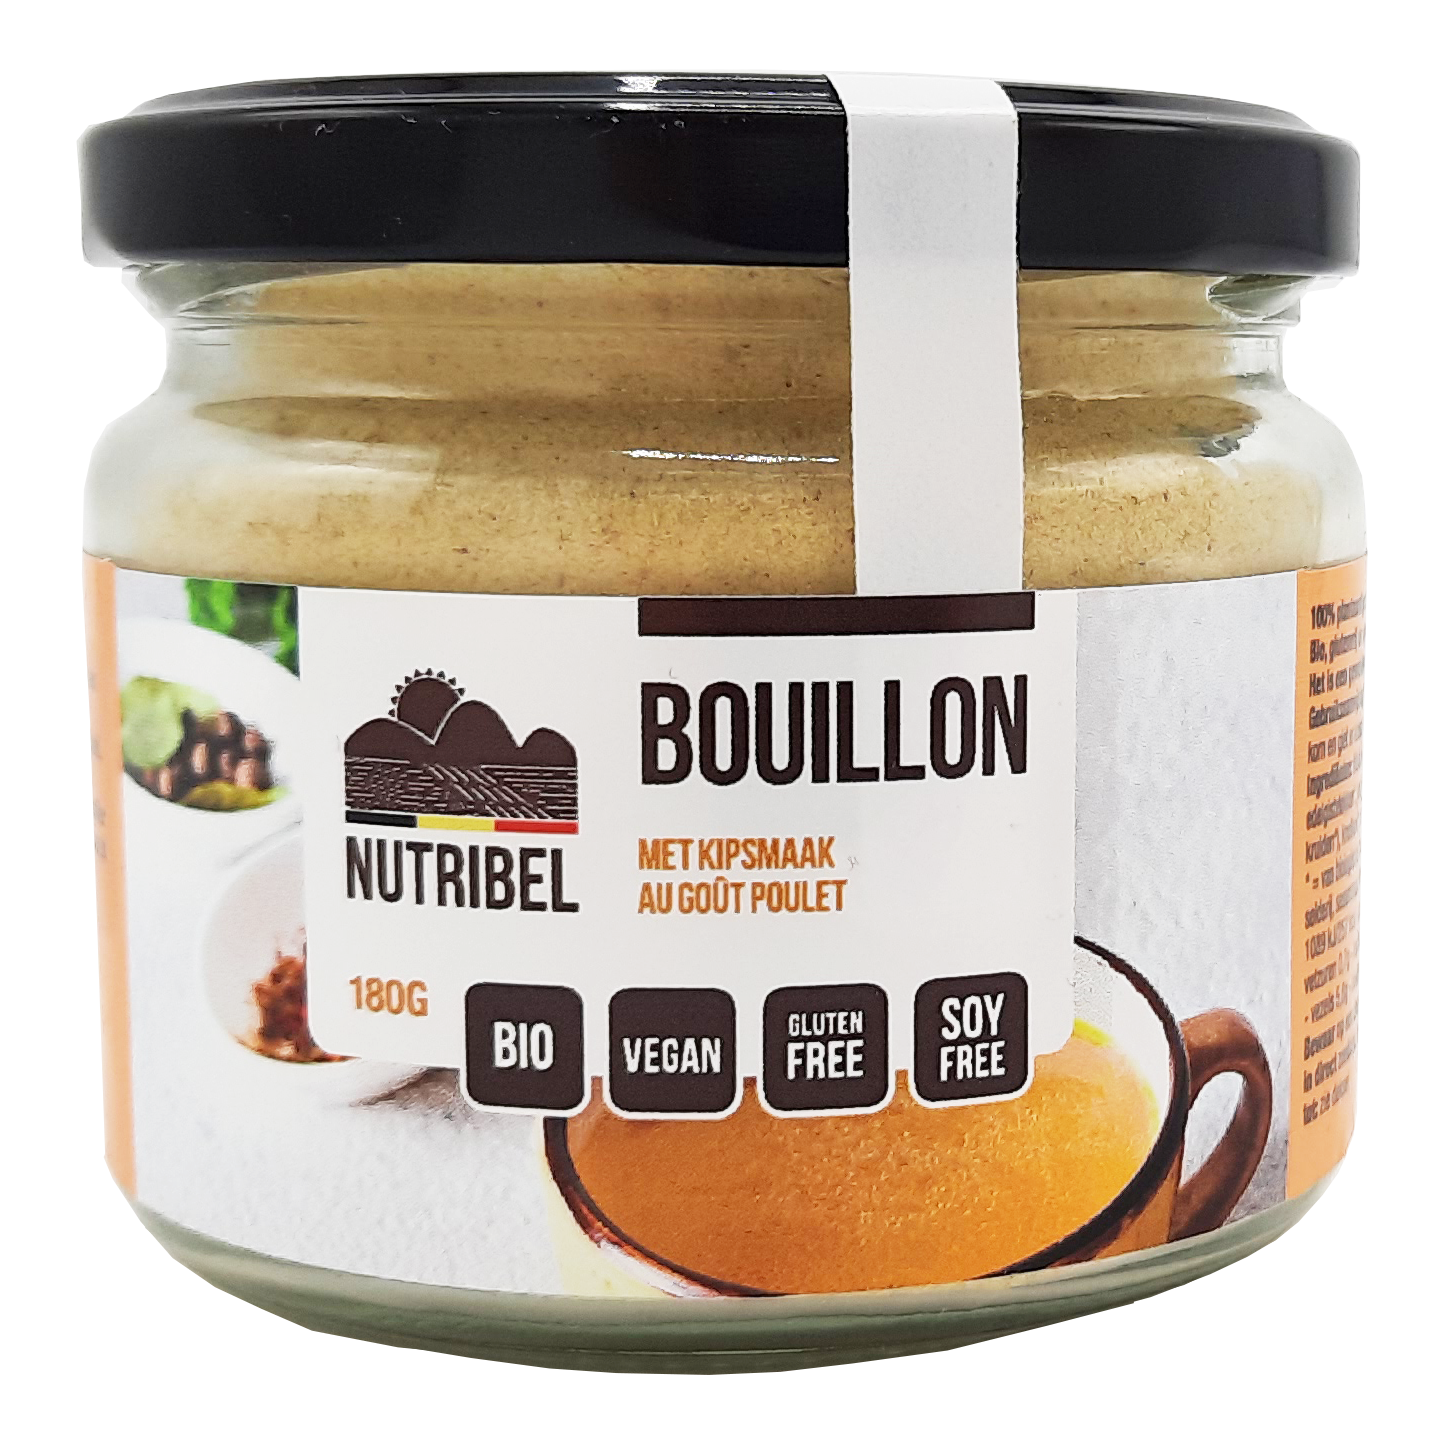 Nutribel Bouillon instant kipsmaak vegan bio 180g